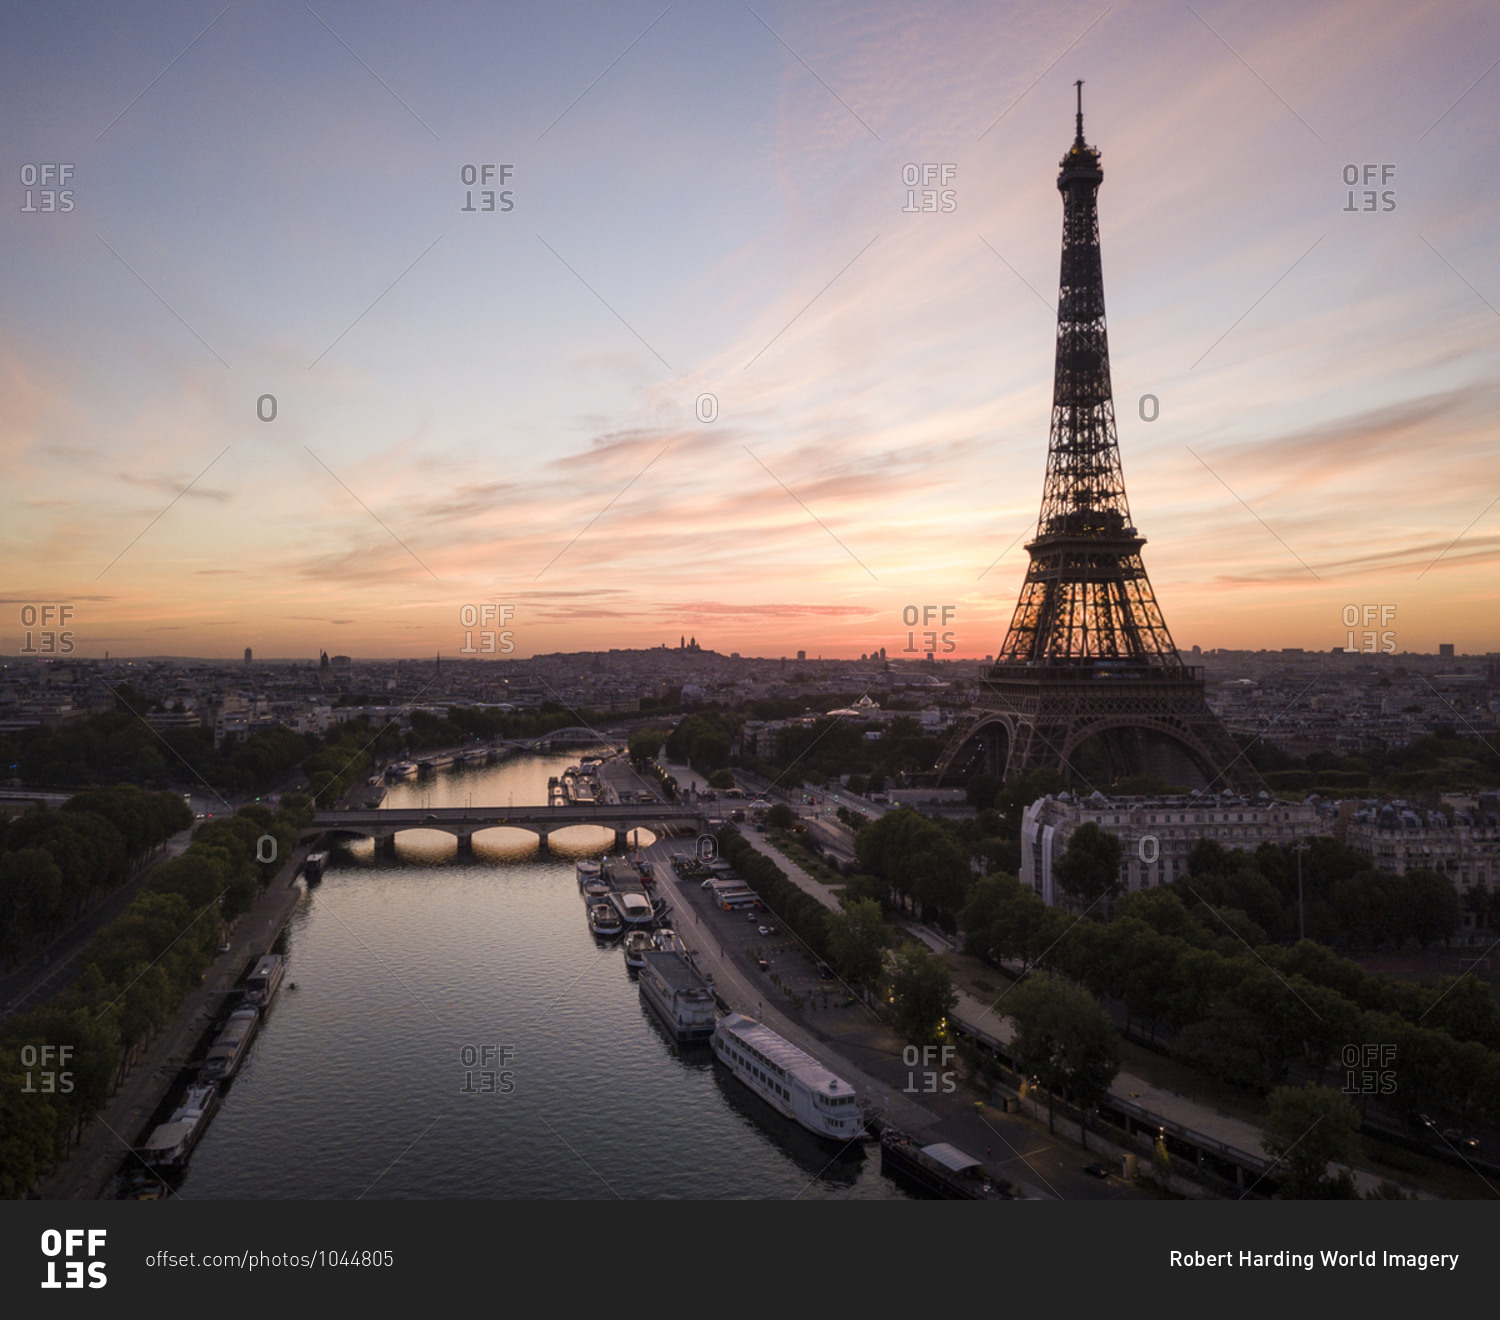 Eiffel Tower and River Seine at dawn, Paris, Ile-de-France, France, Europe